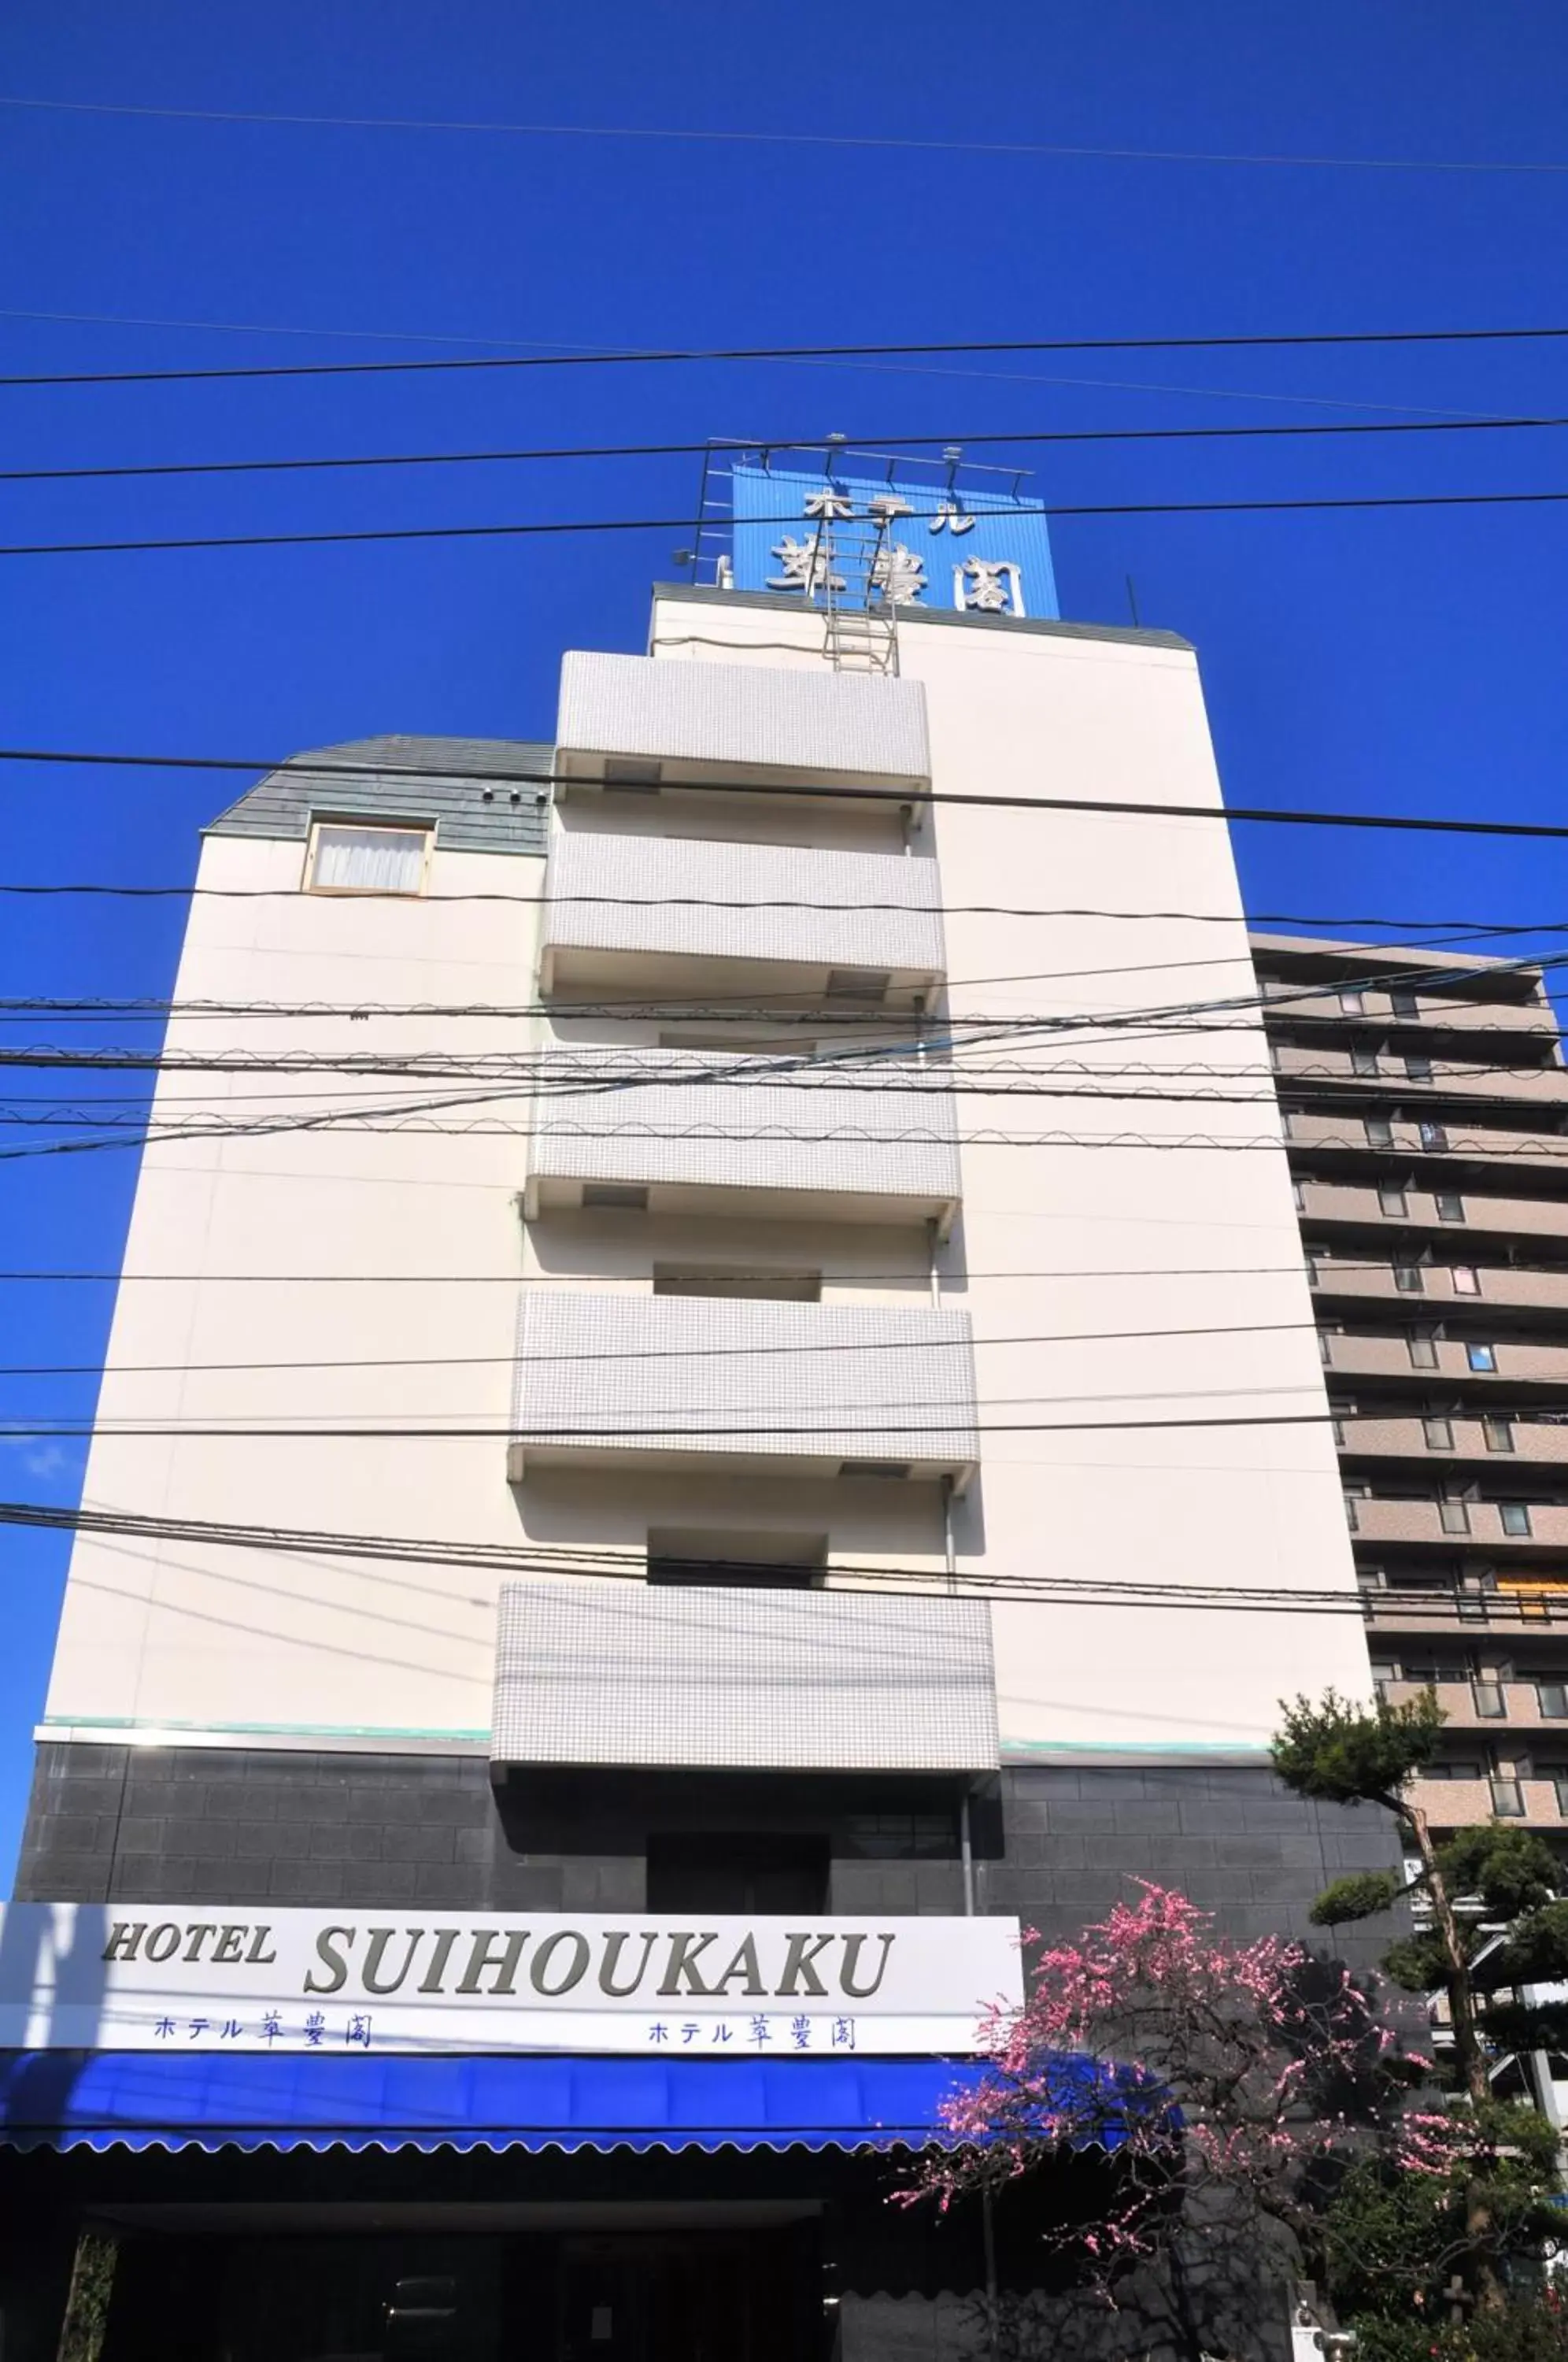 Property building in Suihoukaku Hotel